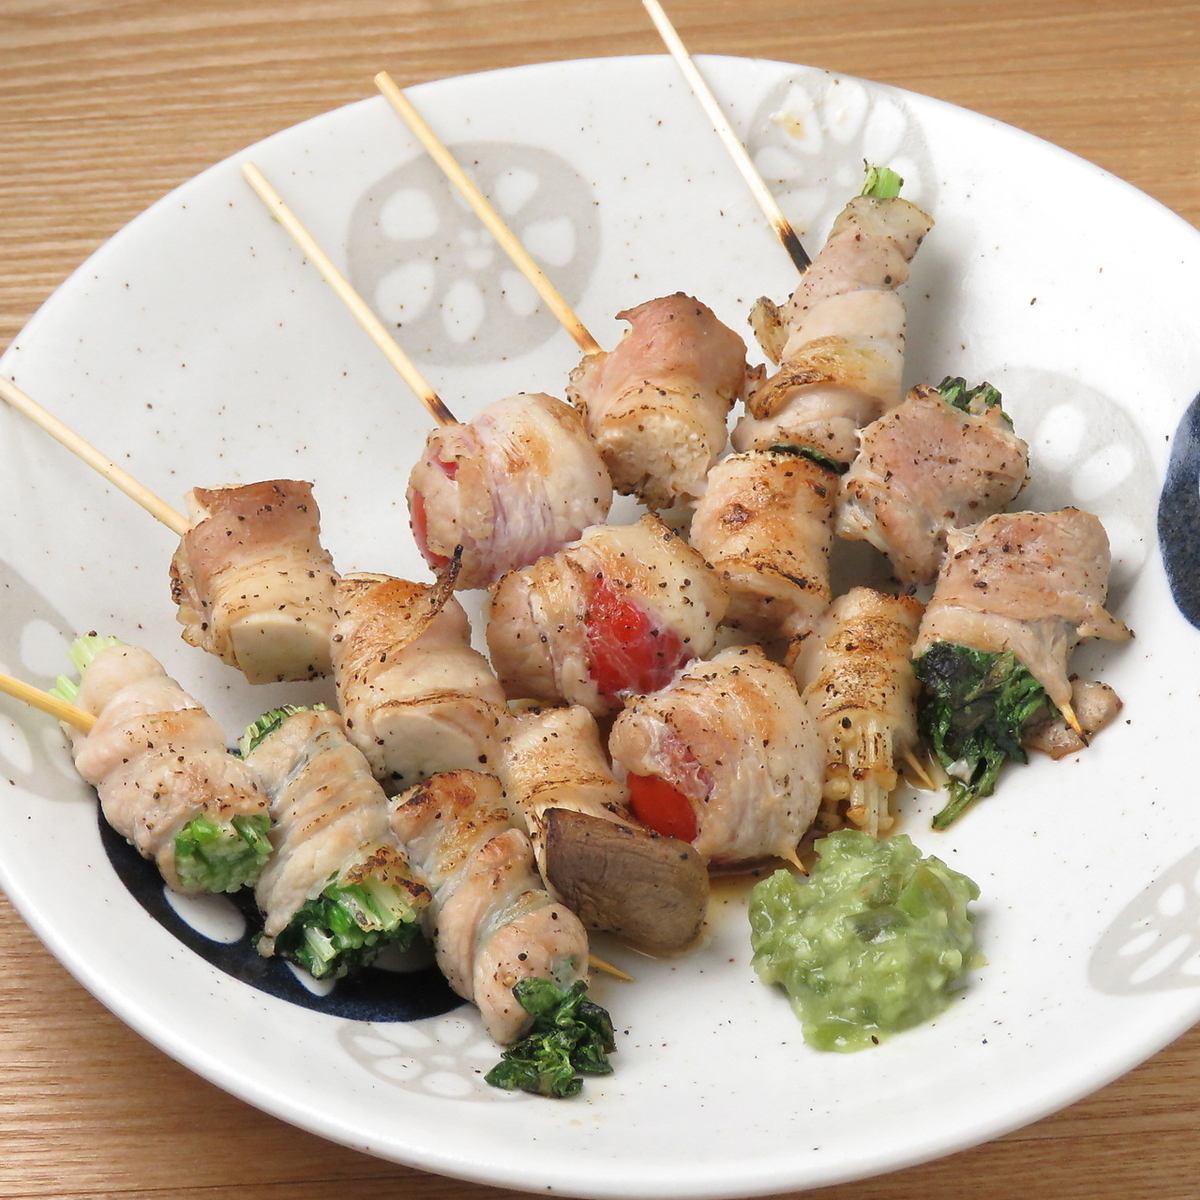 Please enjoy the Hakata gourmet vegetable roll skewers at our restaurant.